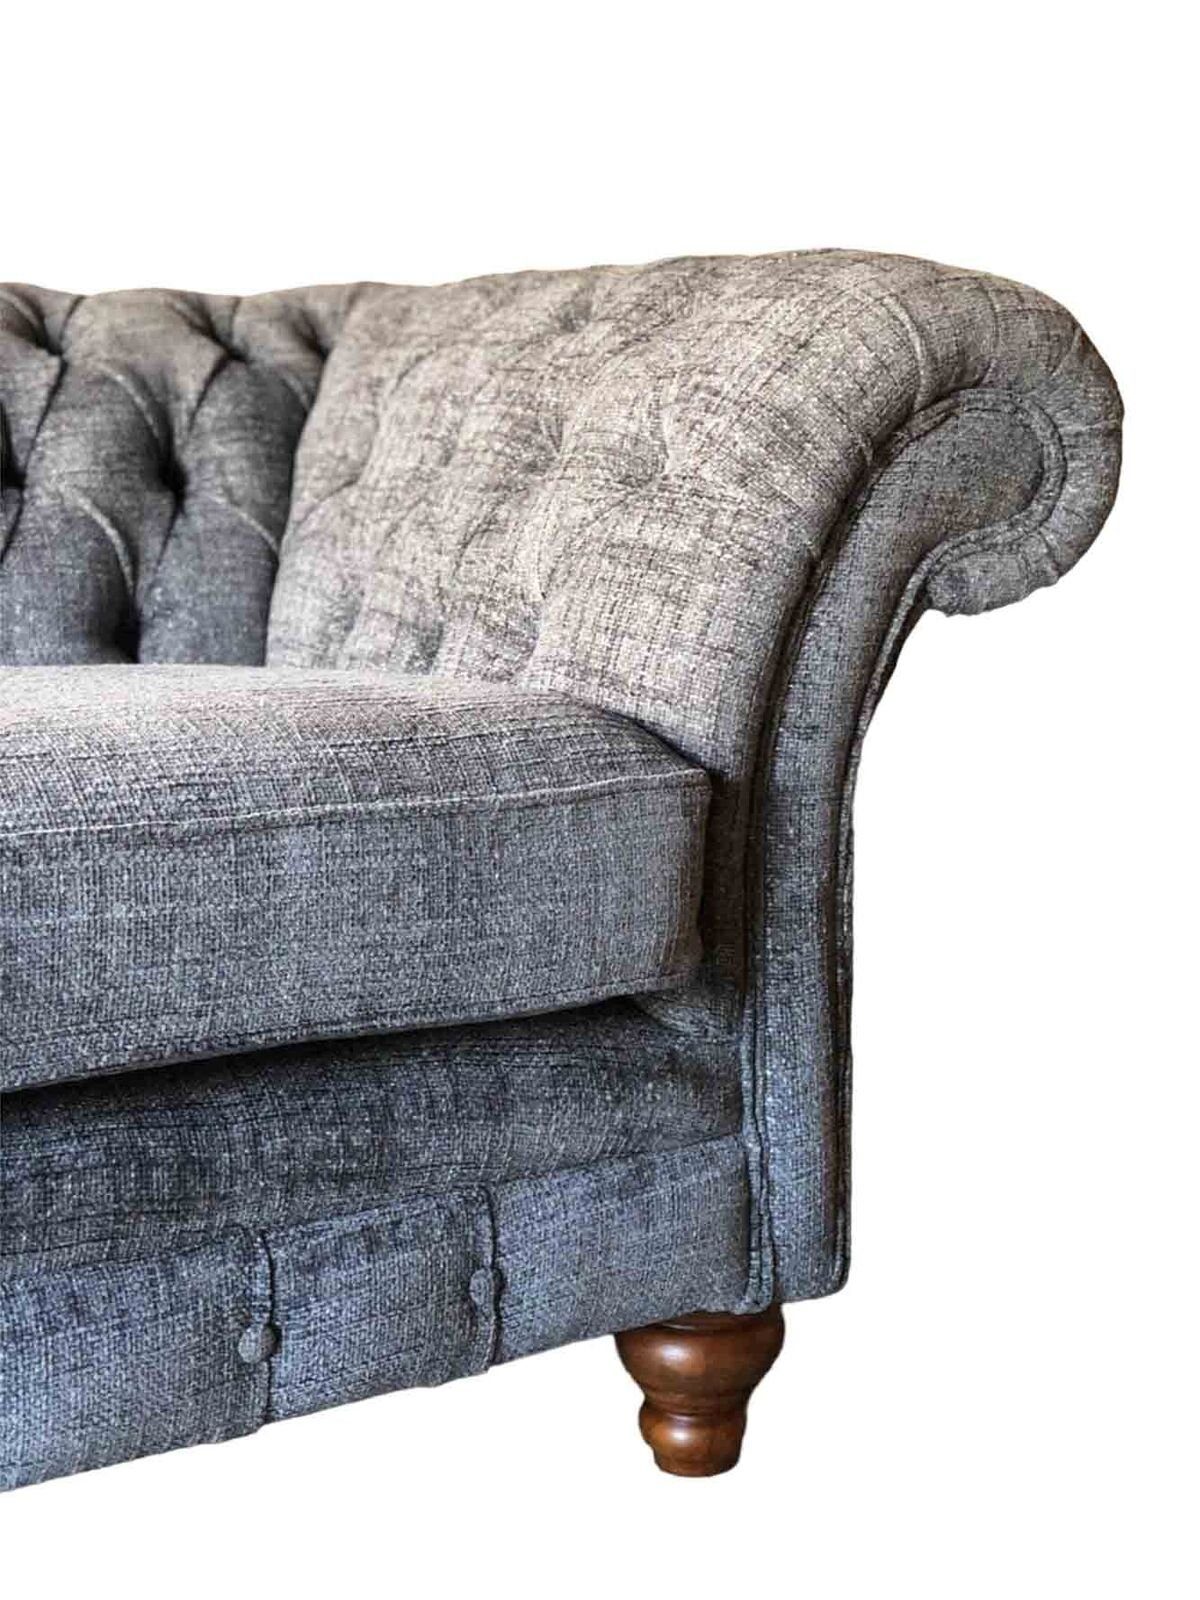 Europe Couchen In Sofa Chesterfield 3 Sofa Couch Made Polster Sitzer Textil Stoff Neu, Sitz JVmoebel